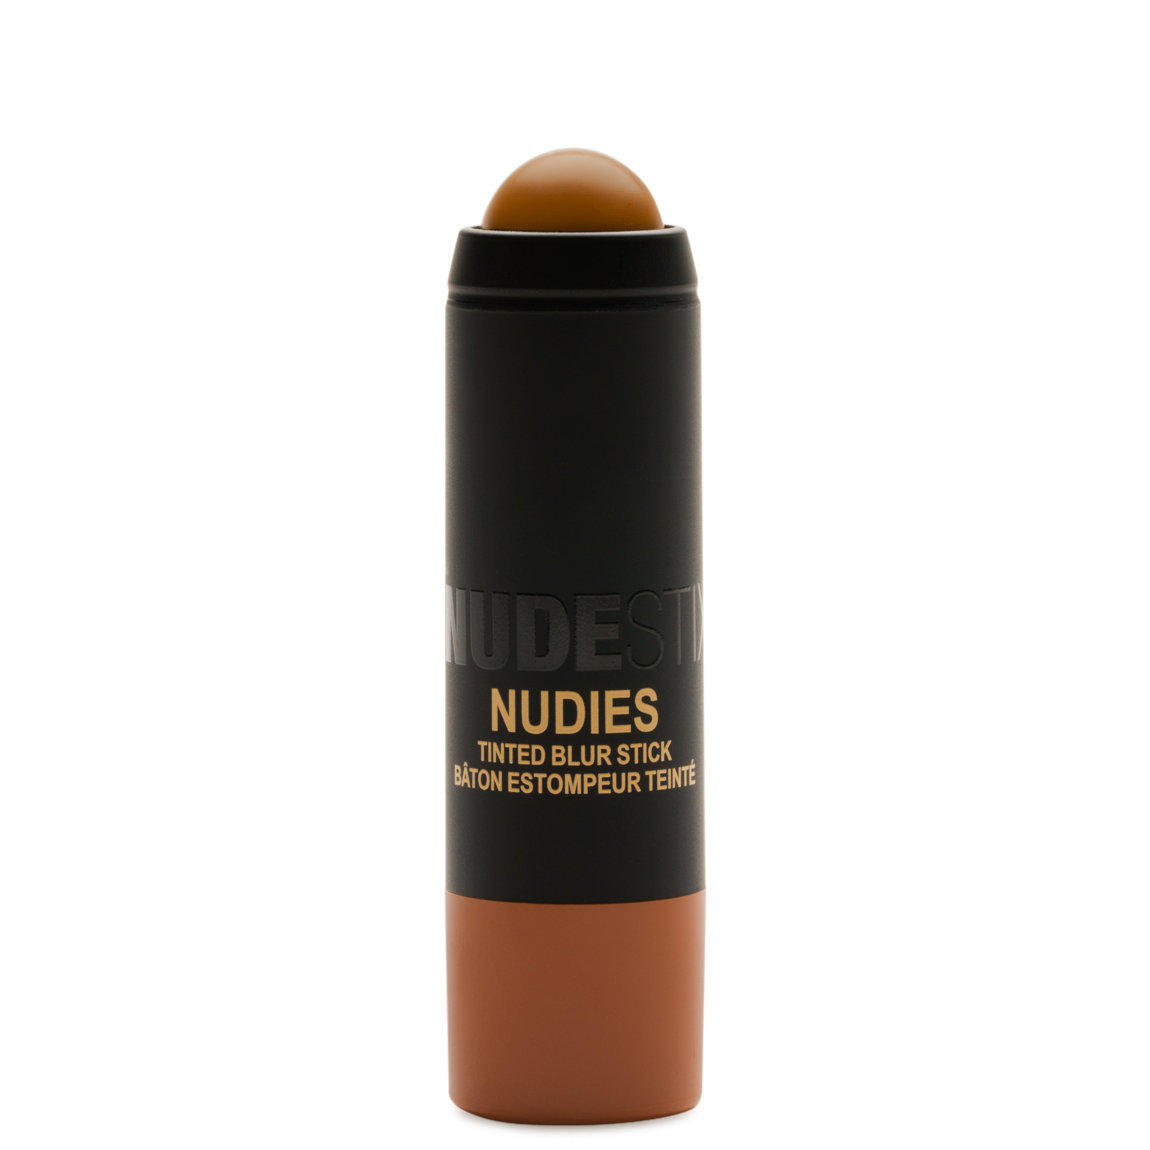 NudeStix Nudies Tinted Blur Stick Deep 8